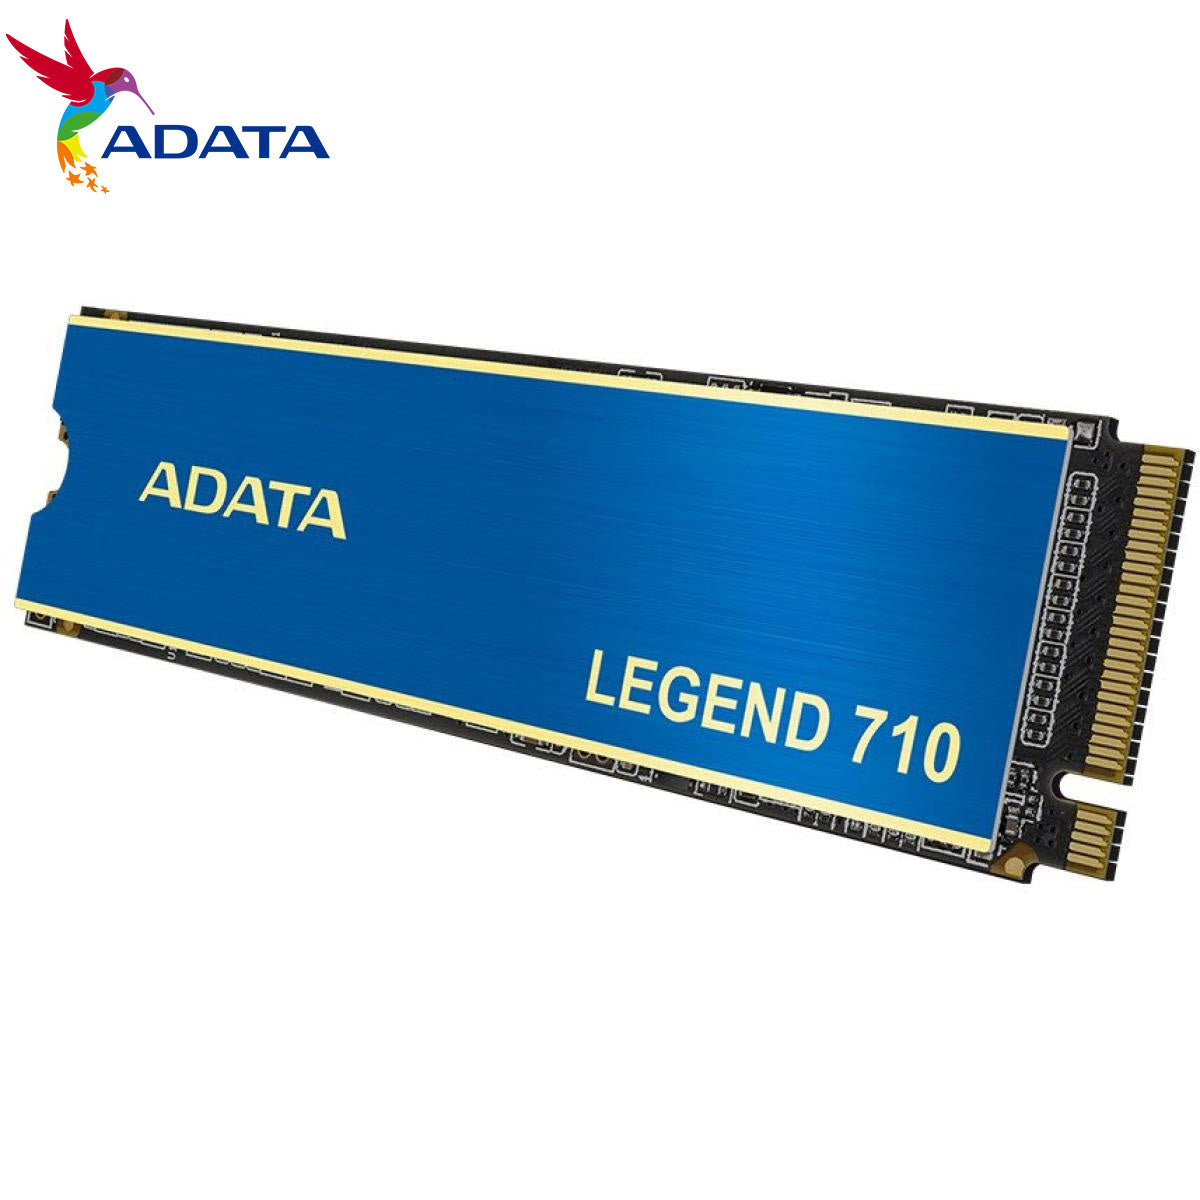 ADATA LEGEND 710 PCIe Gen3 X4 M.2 2280 Solid State Drive 1 TB